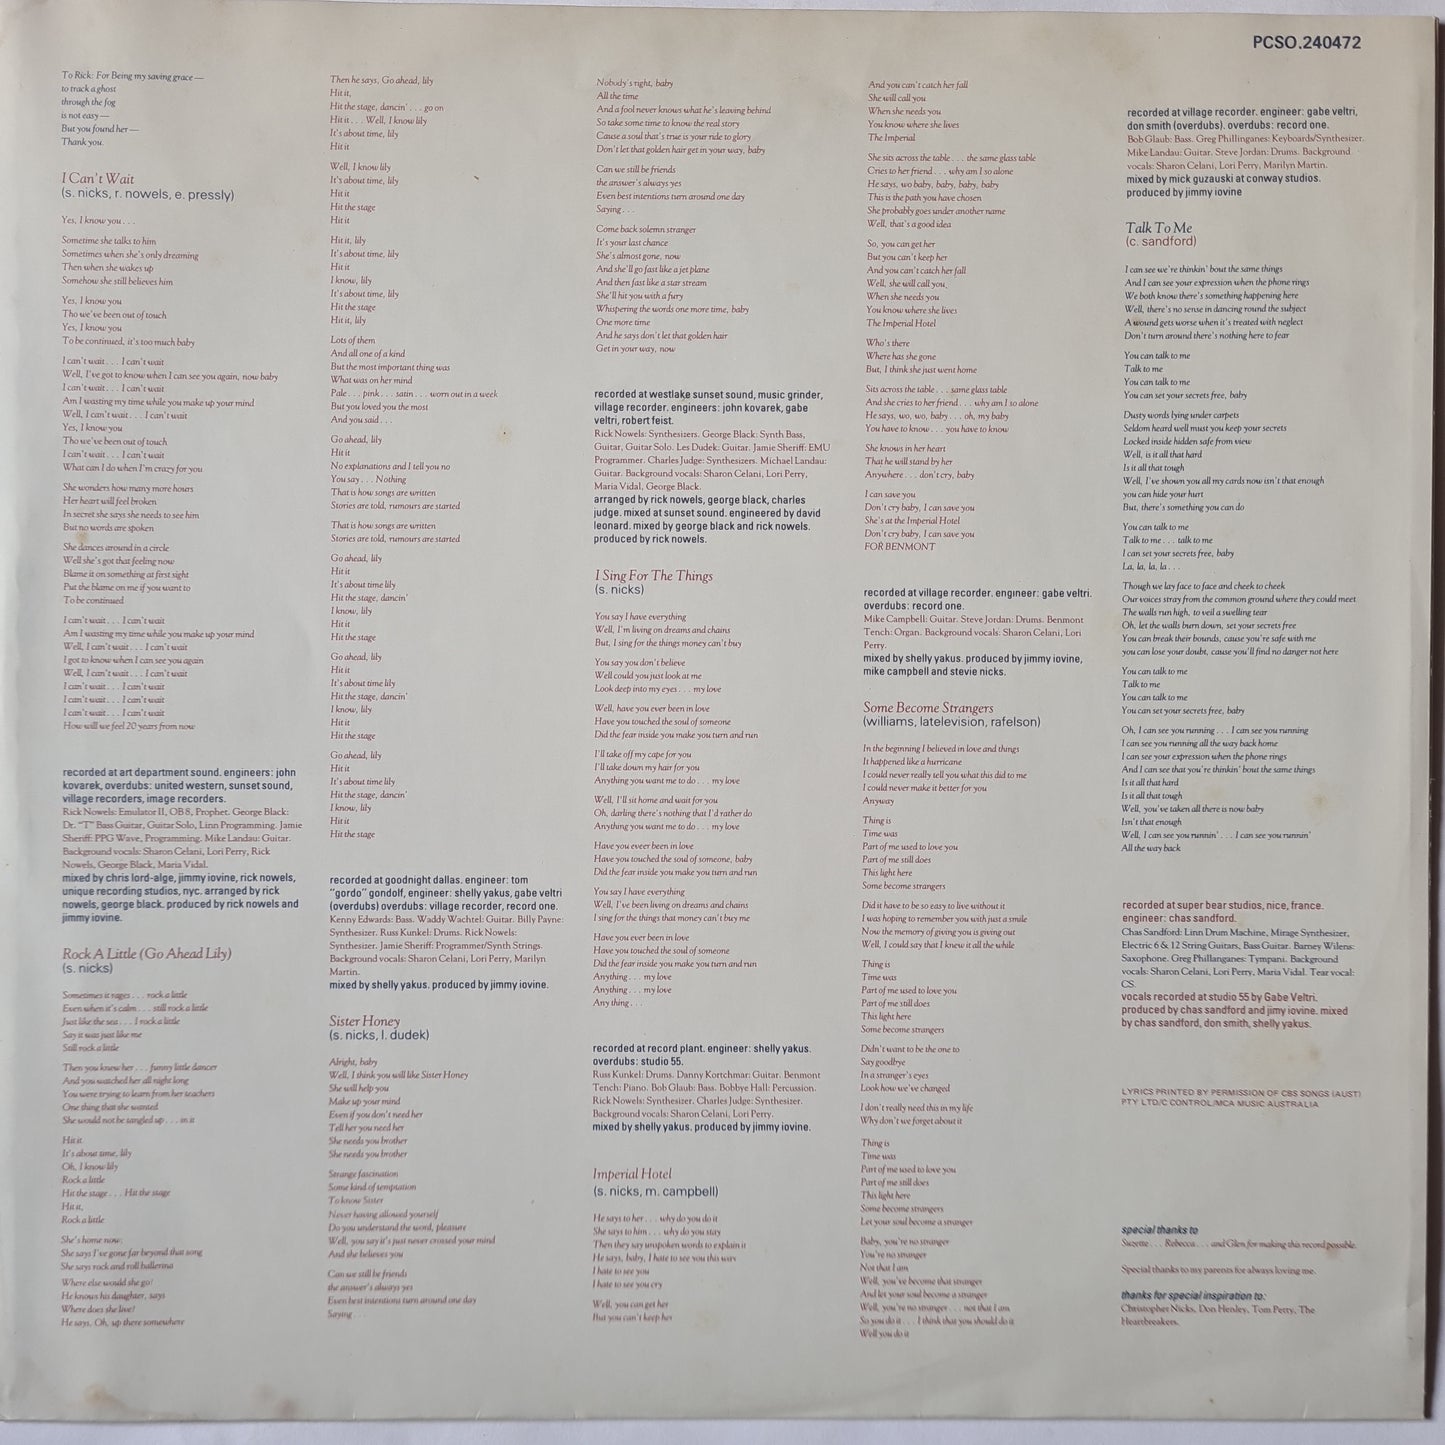 Stevie Nicks  – Rock A Little - 1985 - Vinyl Record